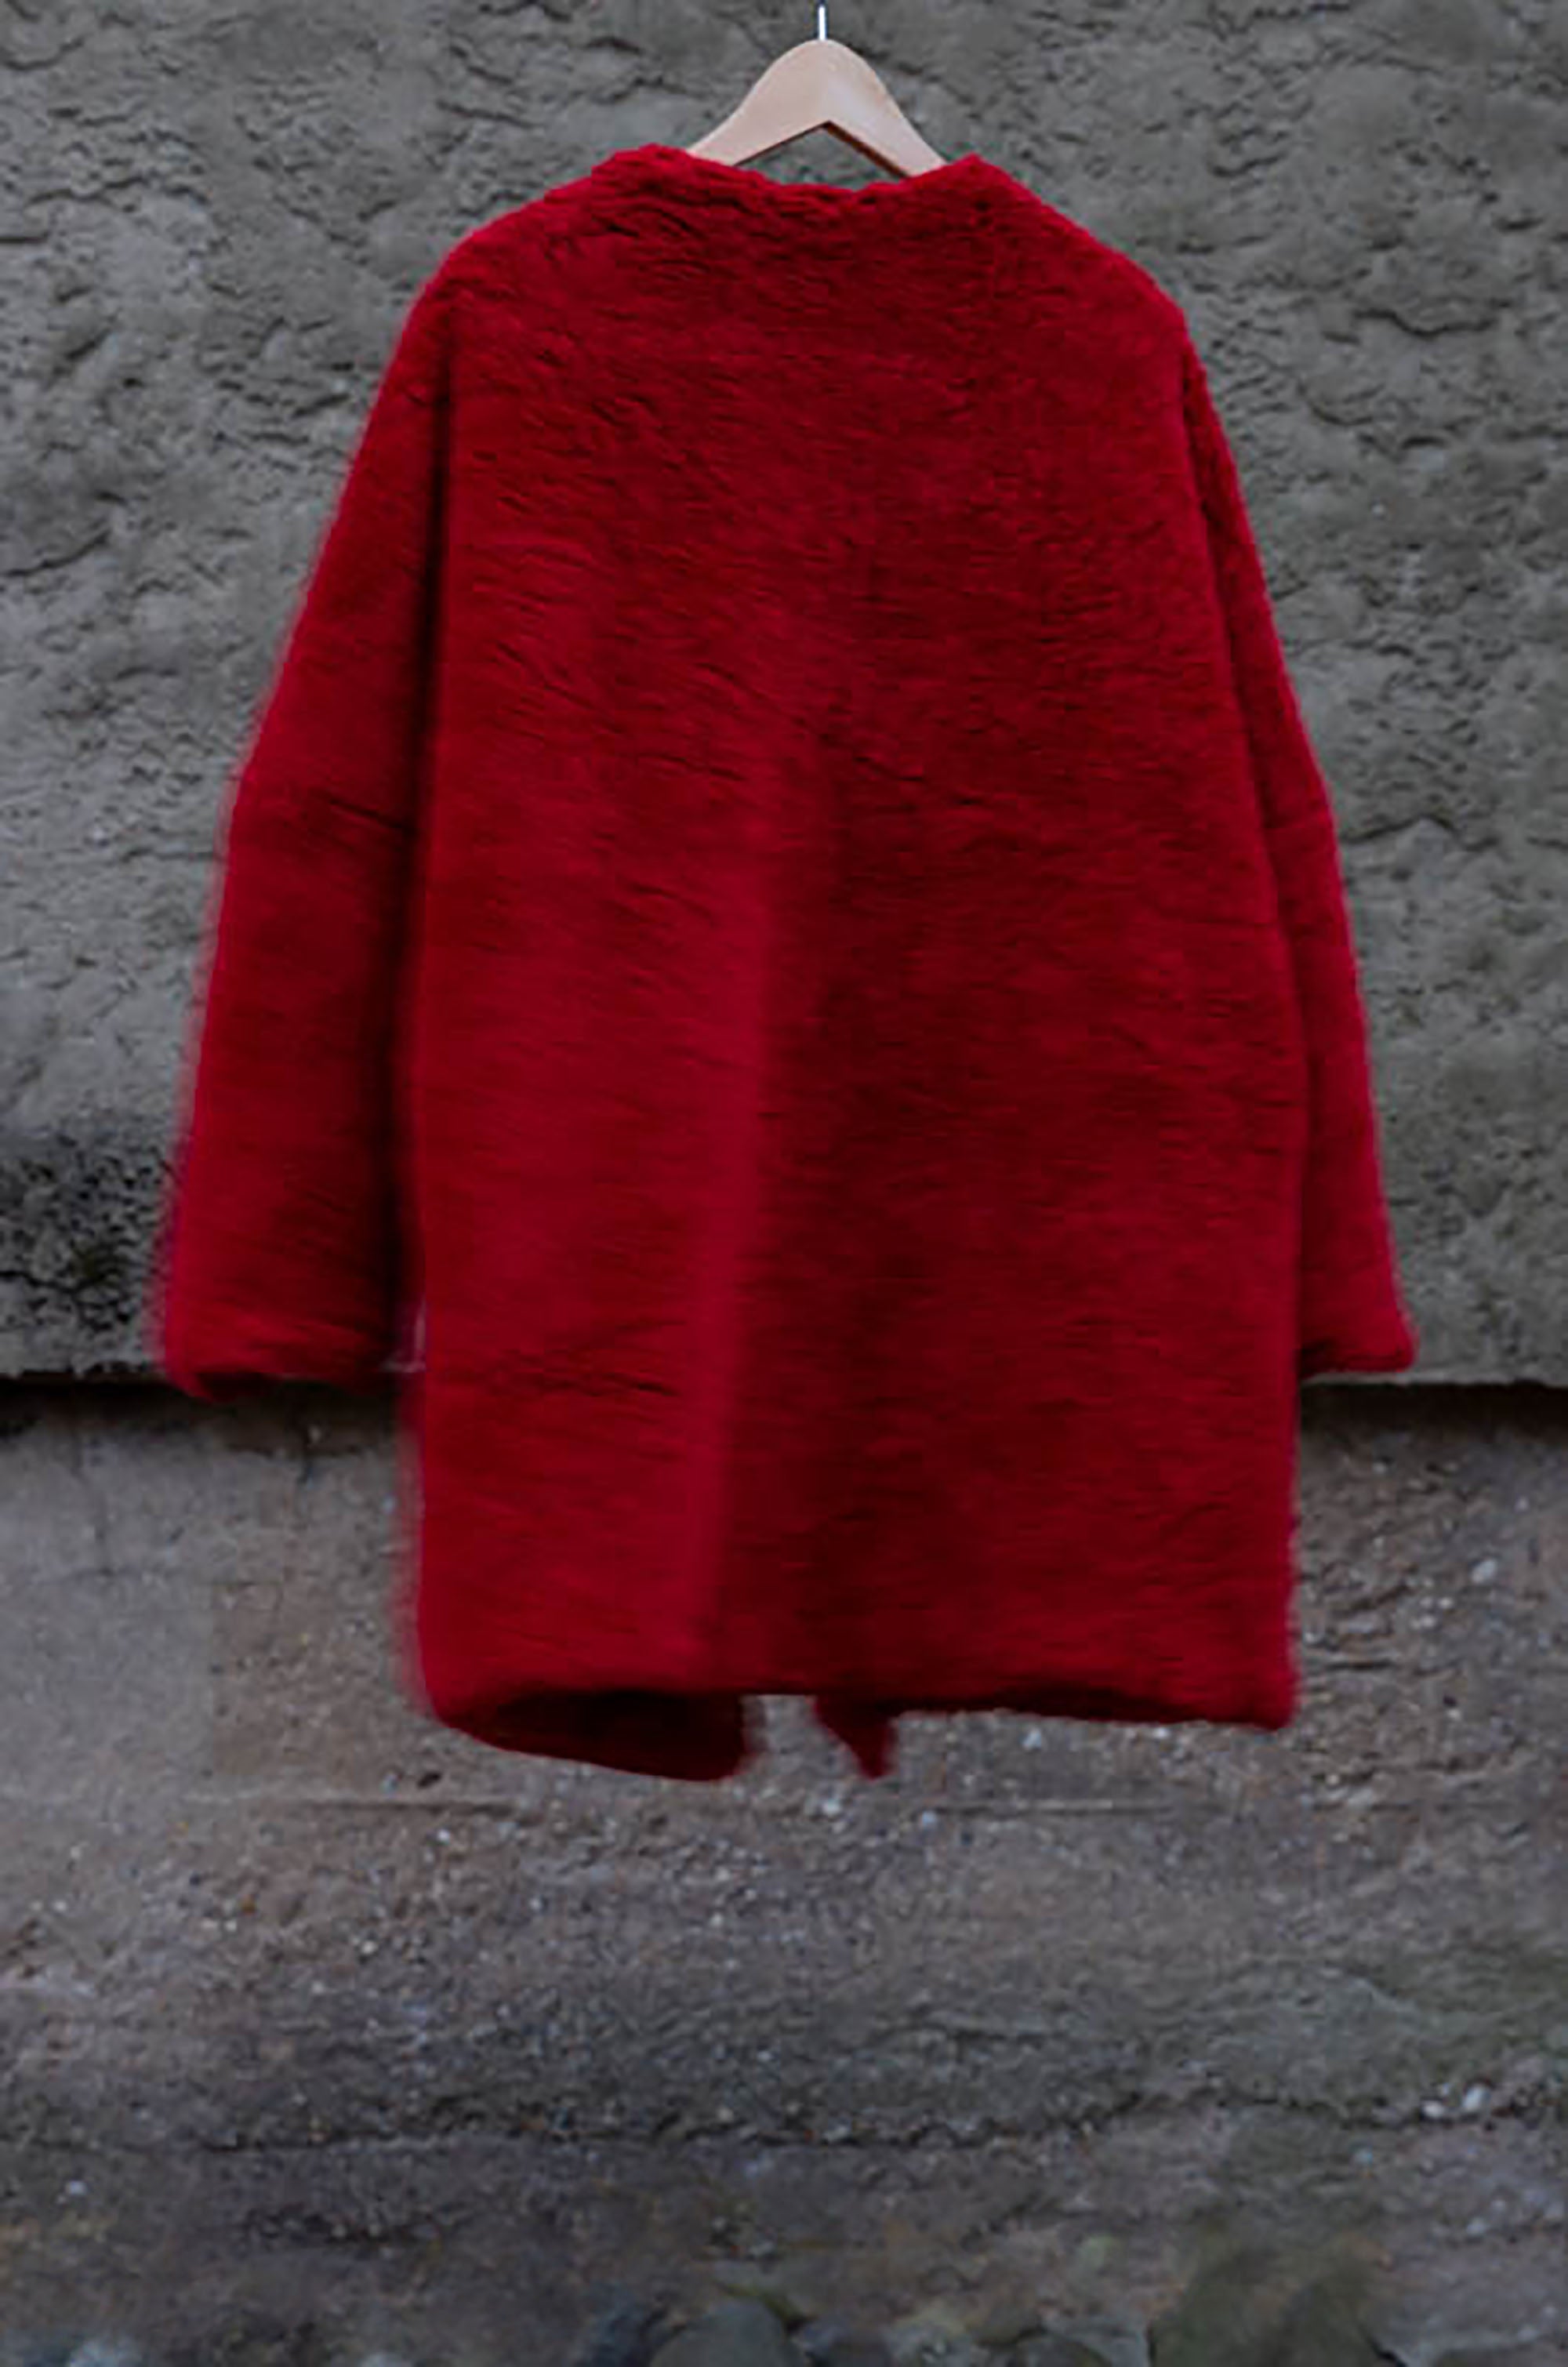 Oversized Faux Fur Coat/ Red Reversible Faux Fur Coat/ Medium Fur Coat with Ikat Print/ Double Face Over Coat/ Evening Fur Coat